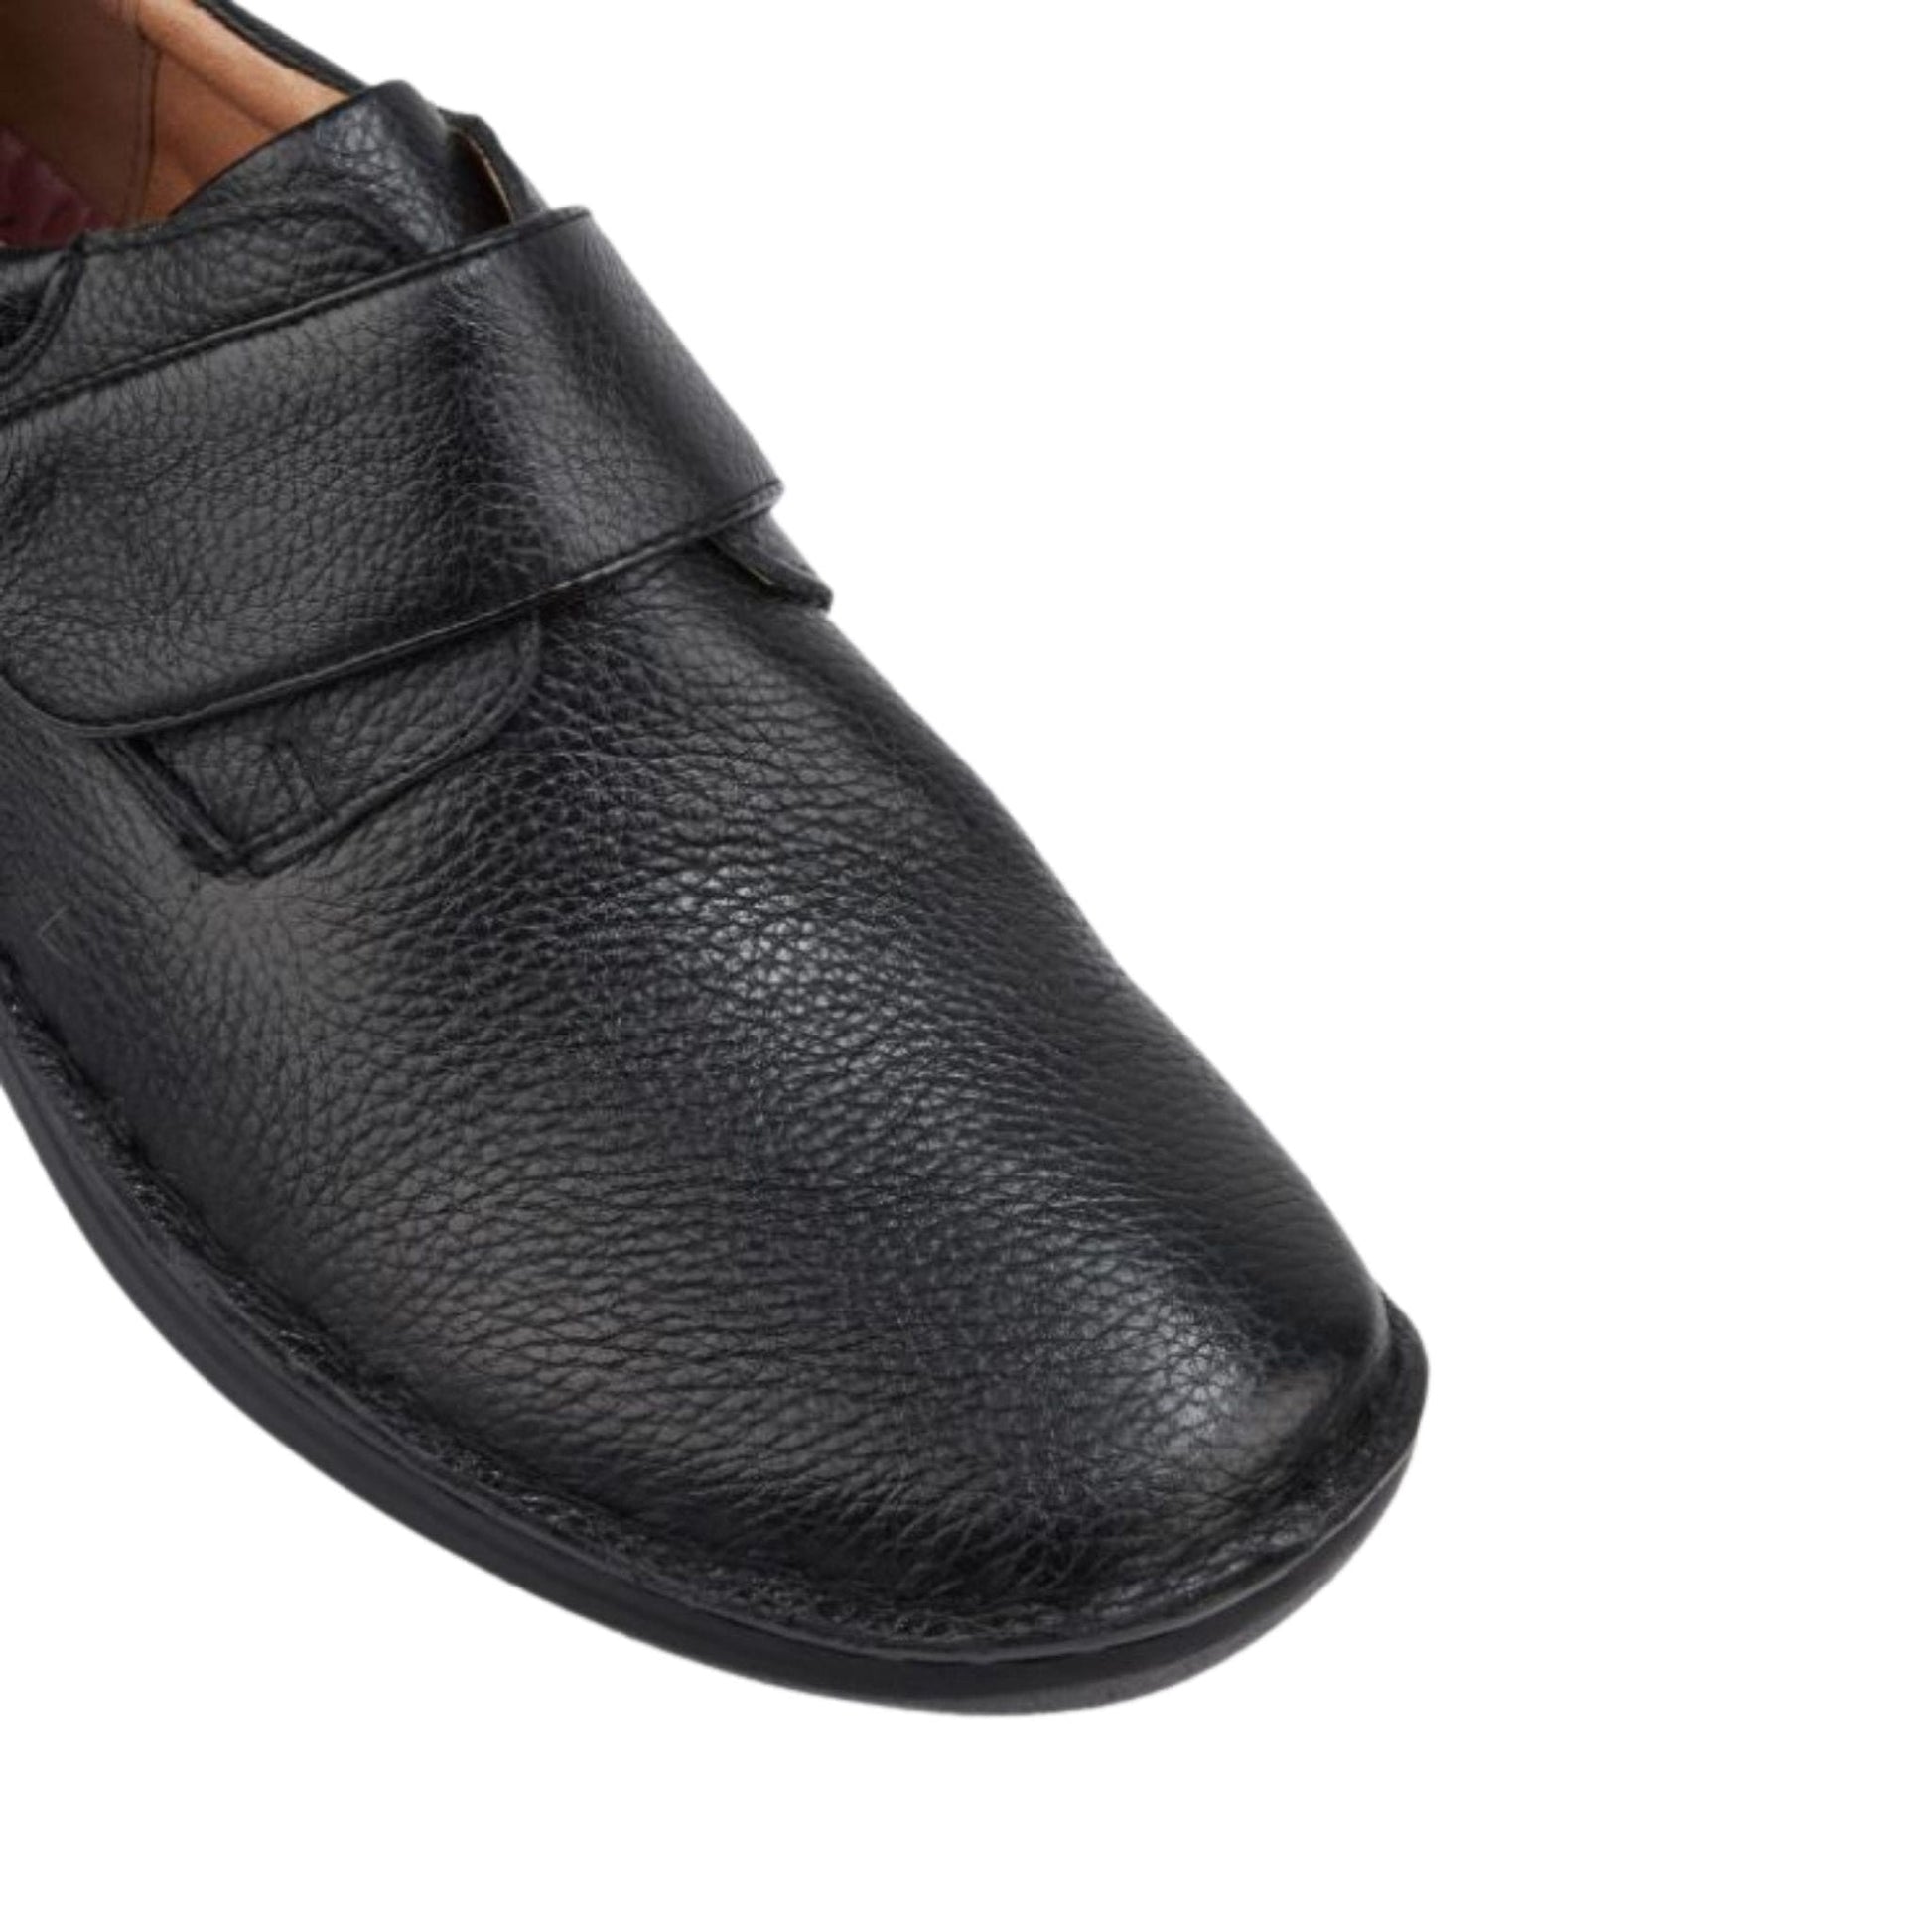 SHOES Men's Bloke Shoe - Sale - Caring Clothing